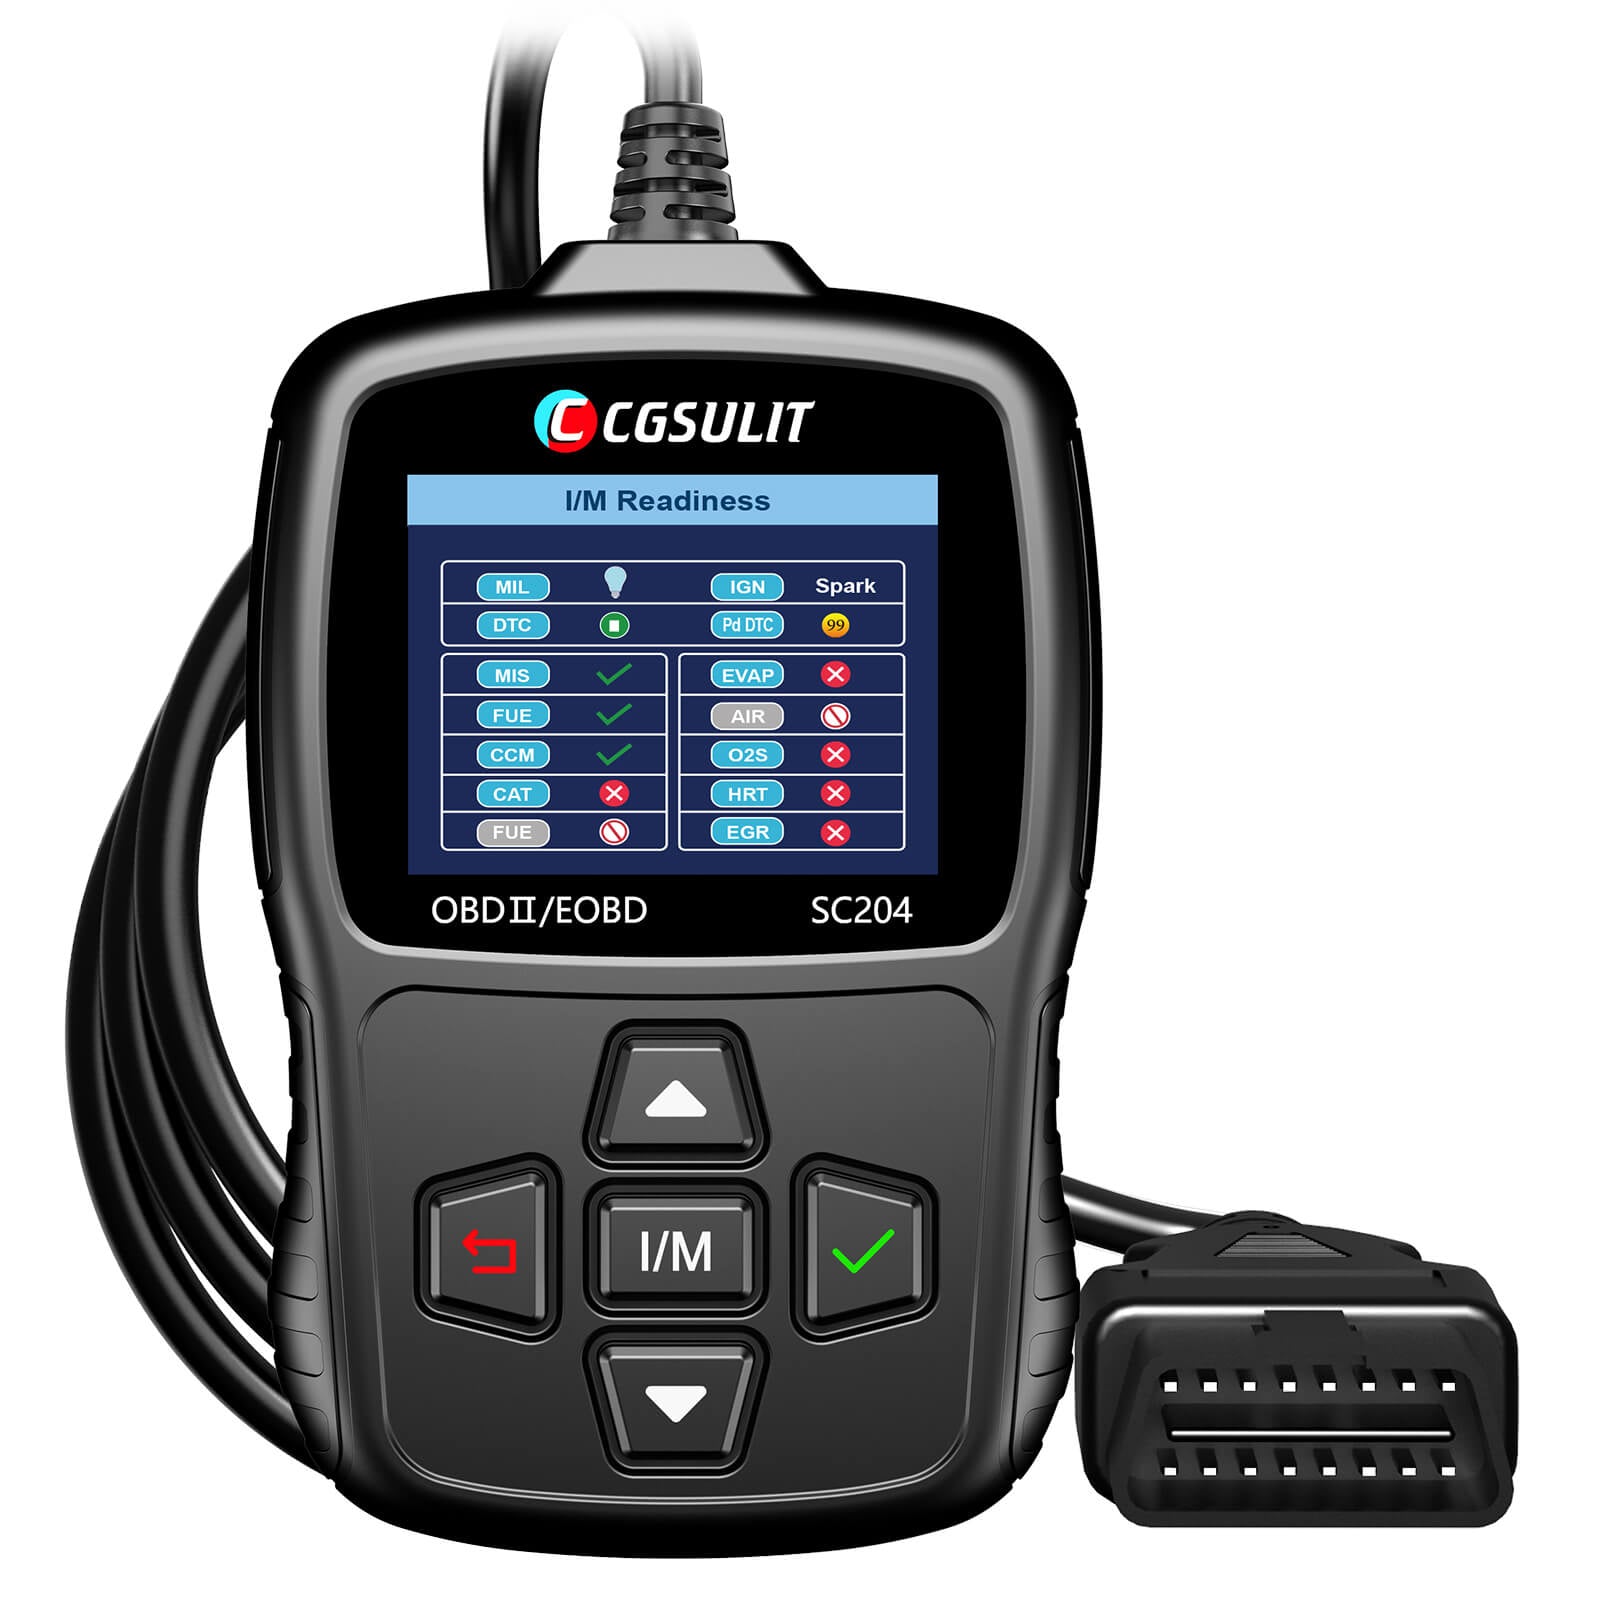 CGSULIT SC204 Car OBD2 Code Reader Scan Tool To Turn Off